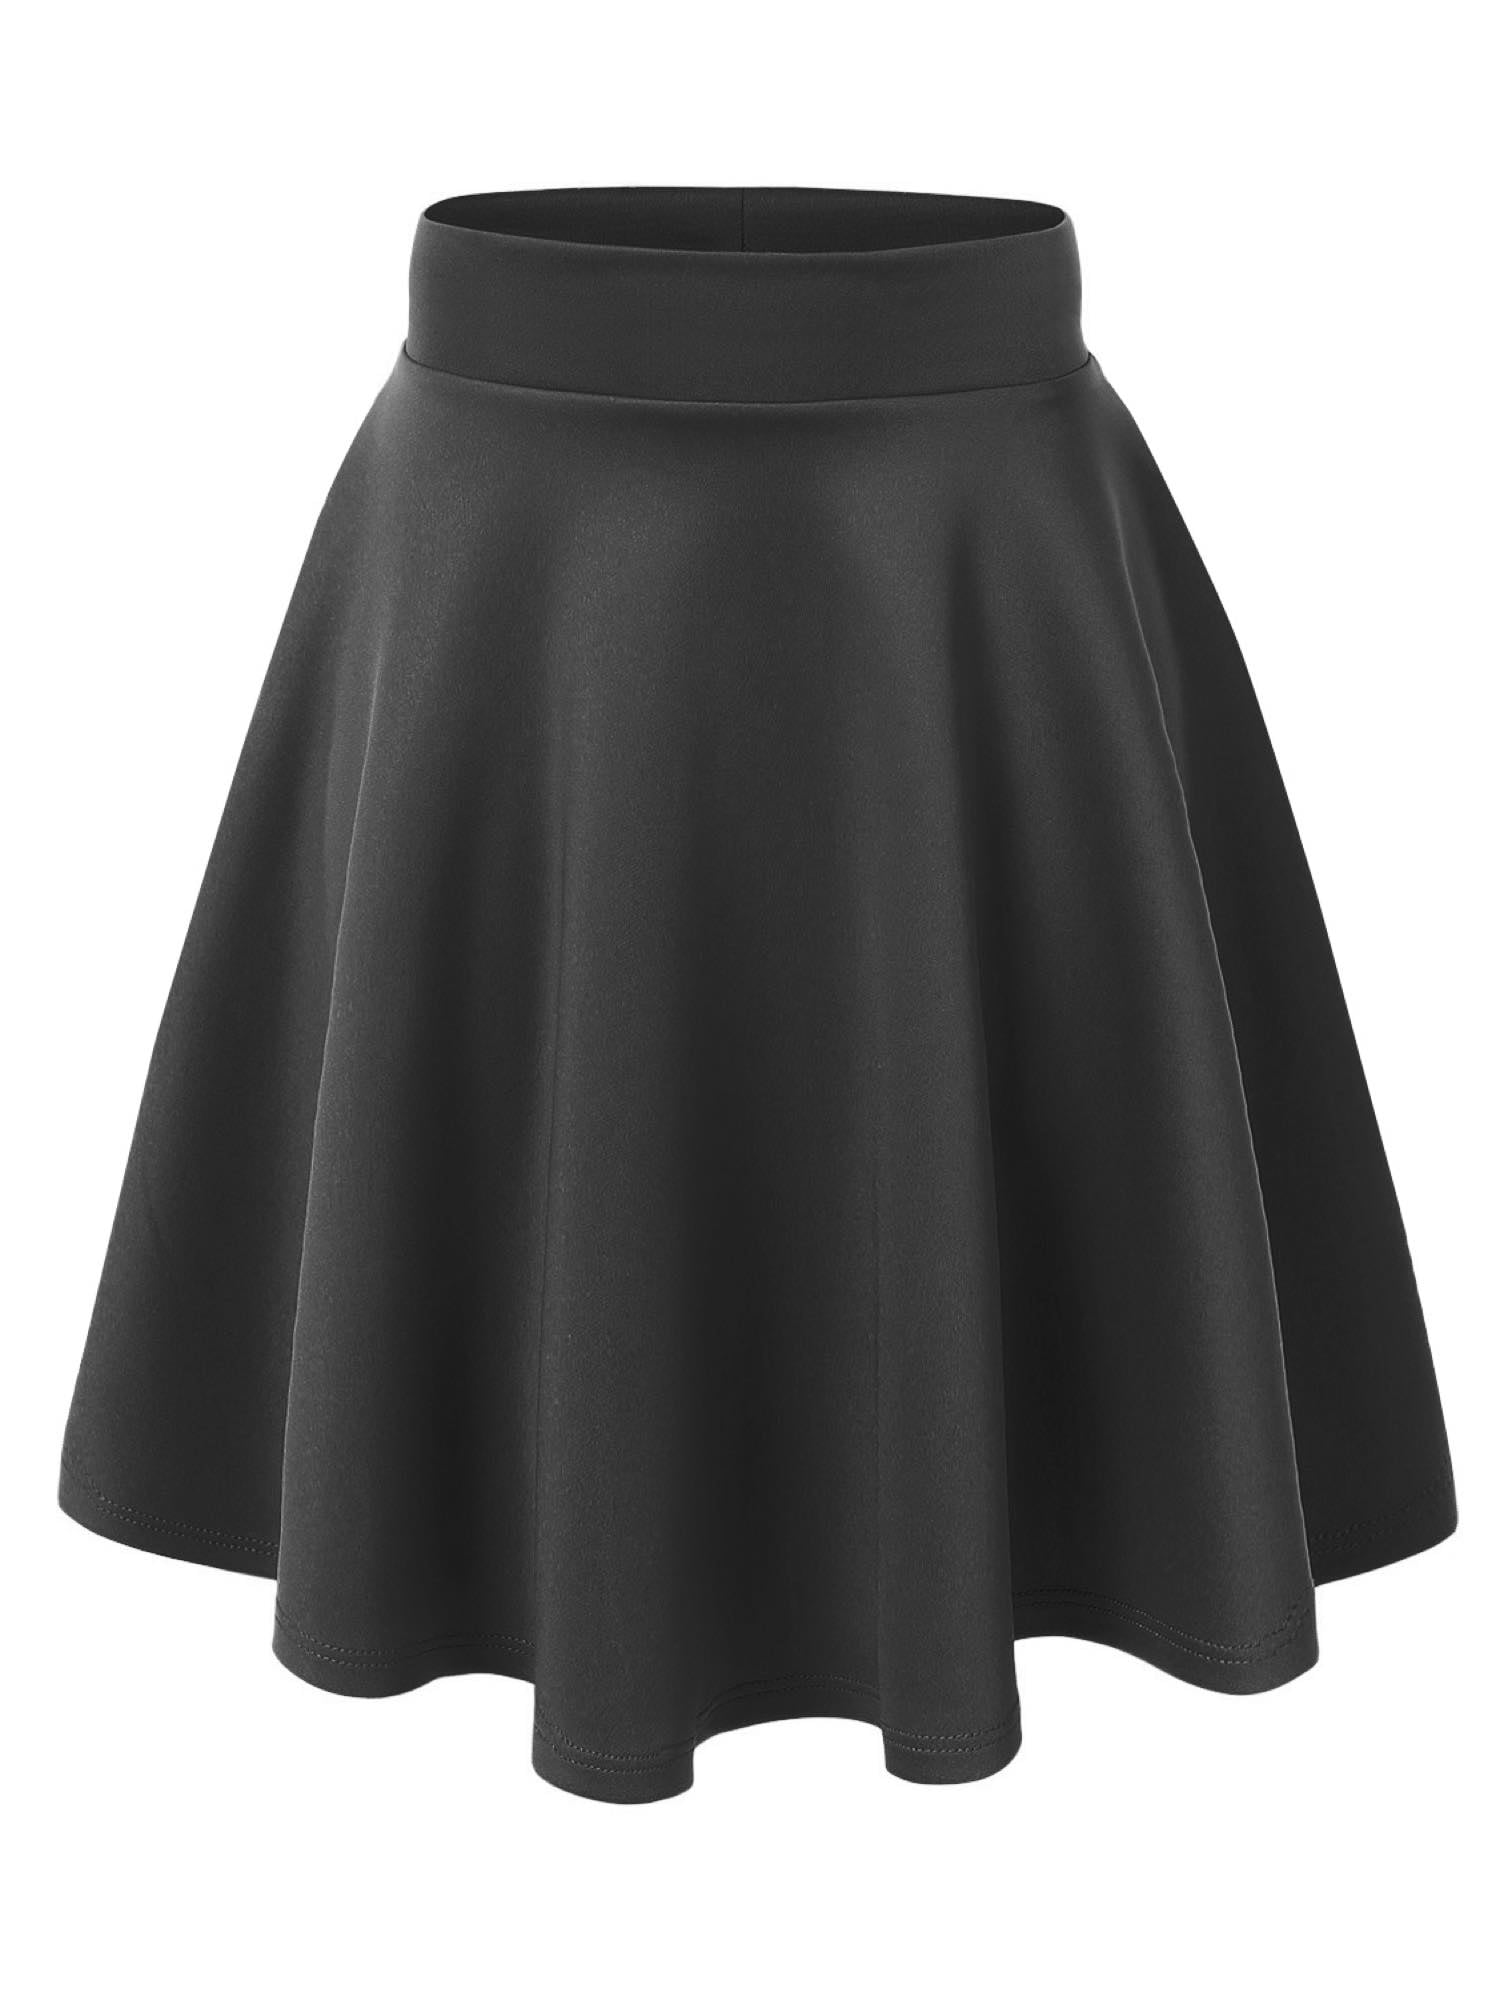 MBJ WB829 Womens Flirty Flare Skirt XL CHARCOAL